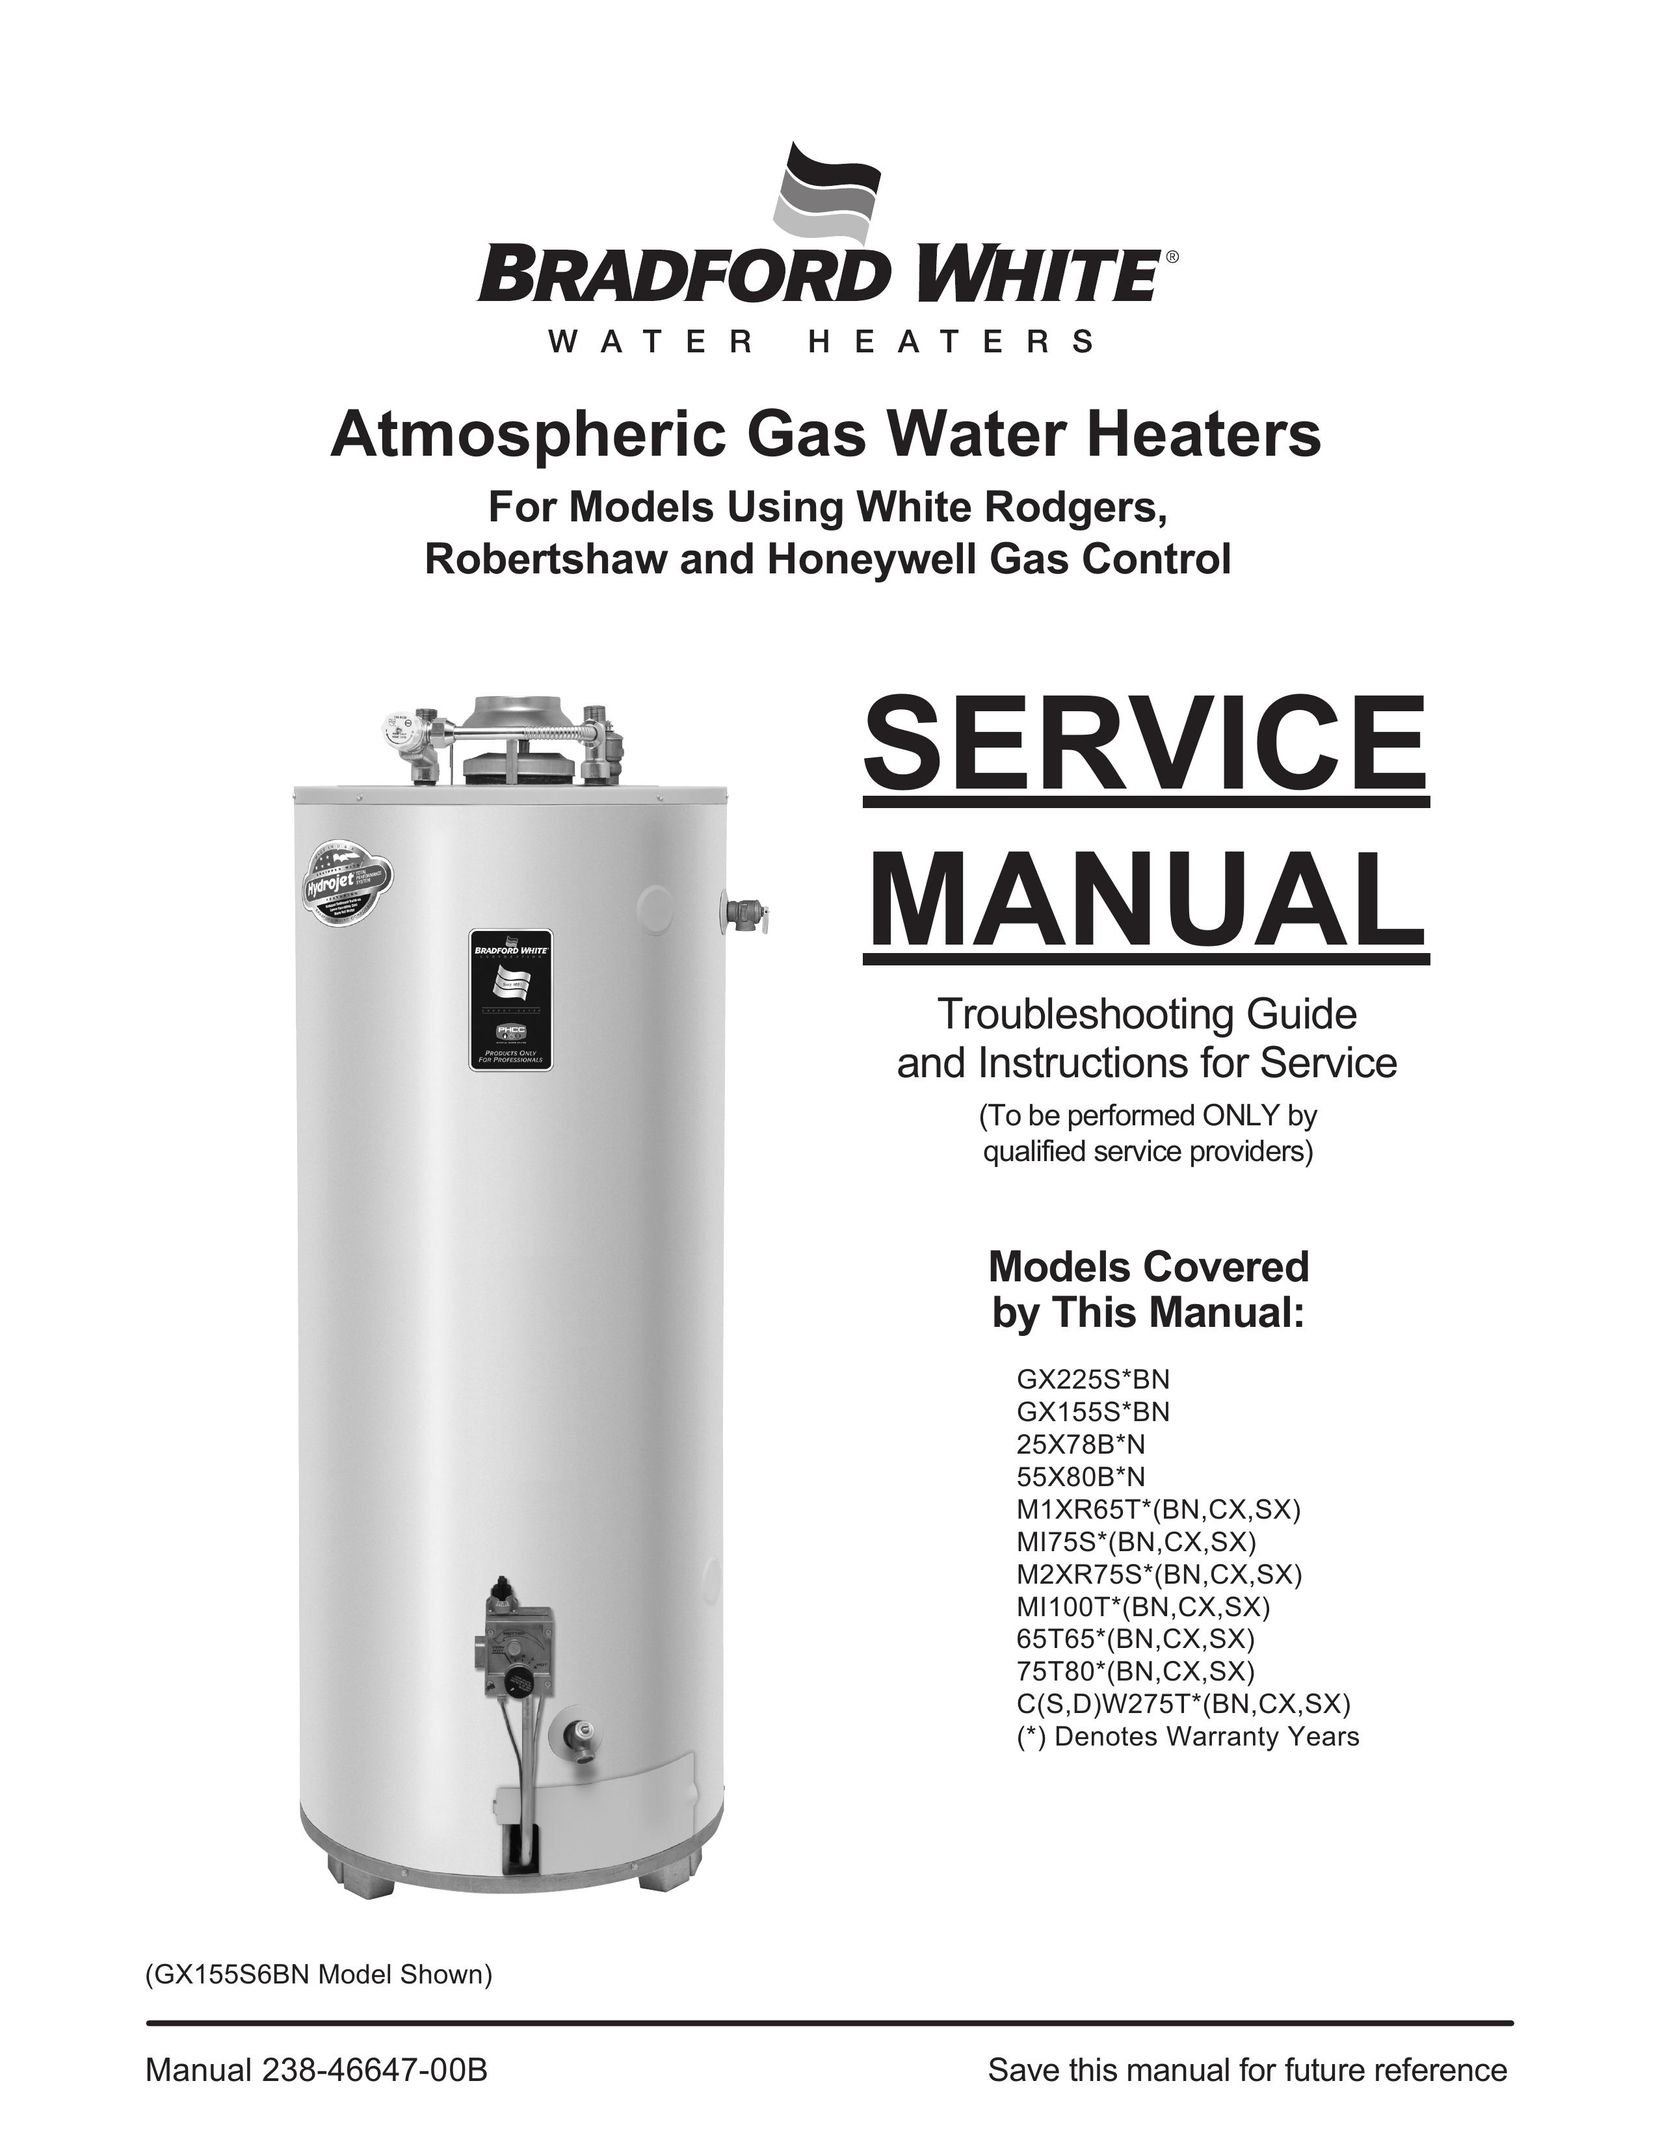 Bradford-White Corp 25X78B*N Water Heater User Manual